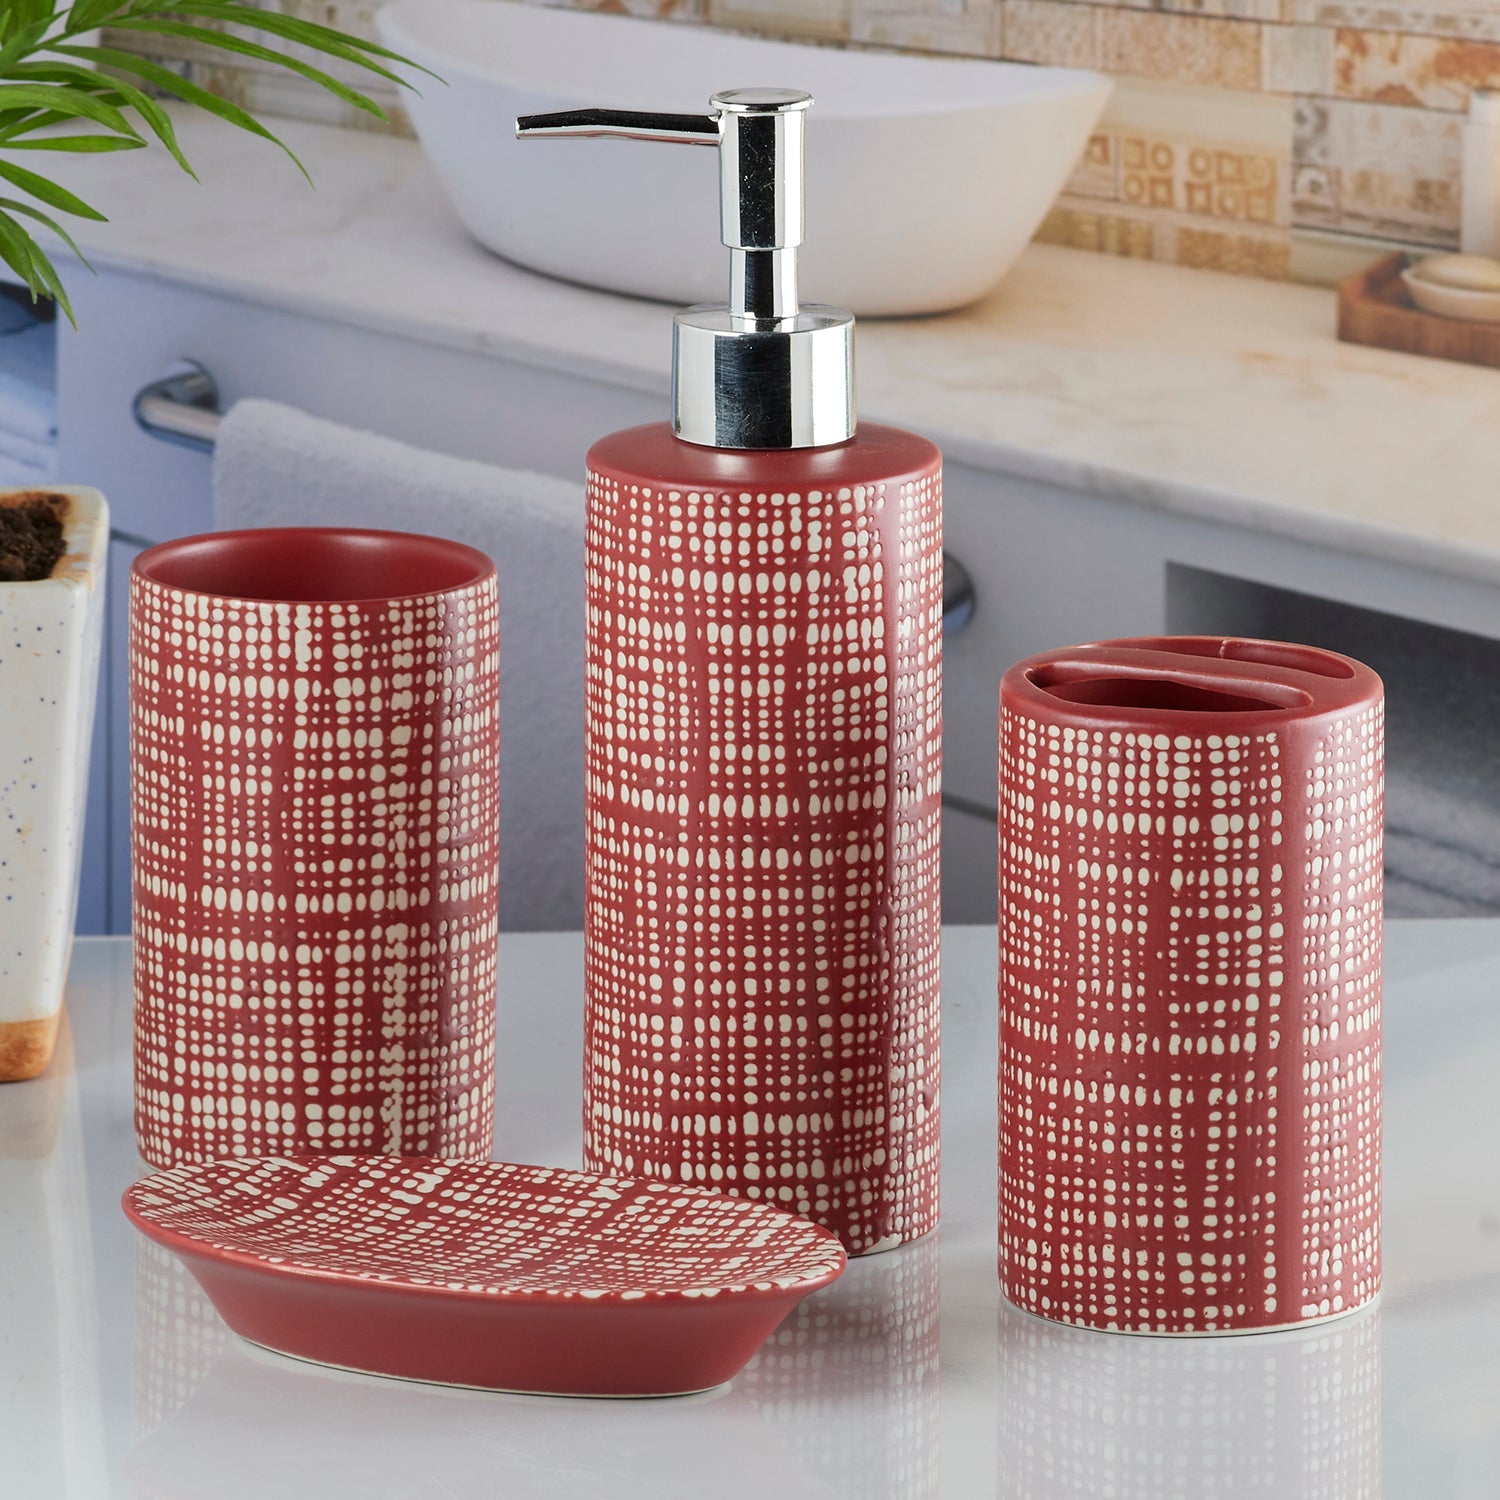 Ceramic Bathroom Accessories Set of 4 Bath Set with Soap Dispenser (5748)